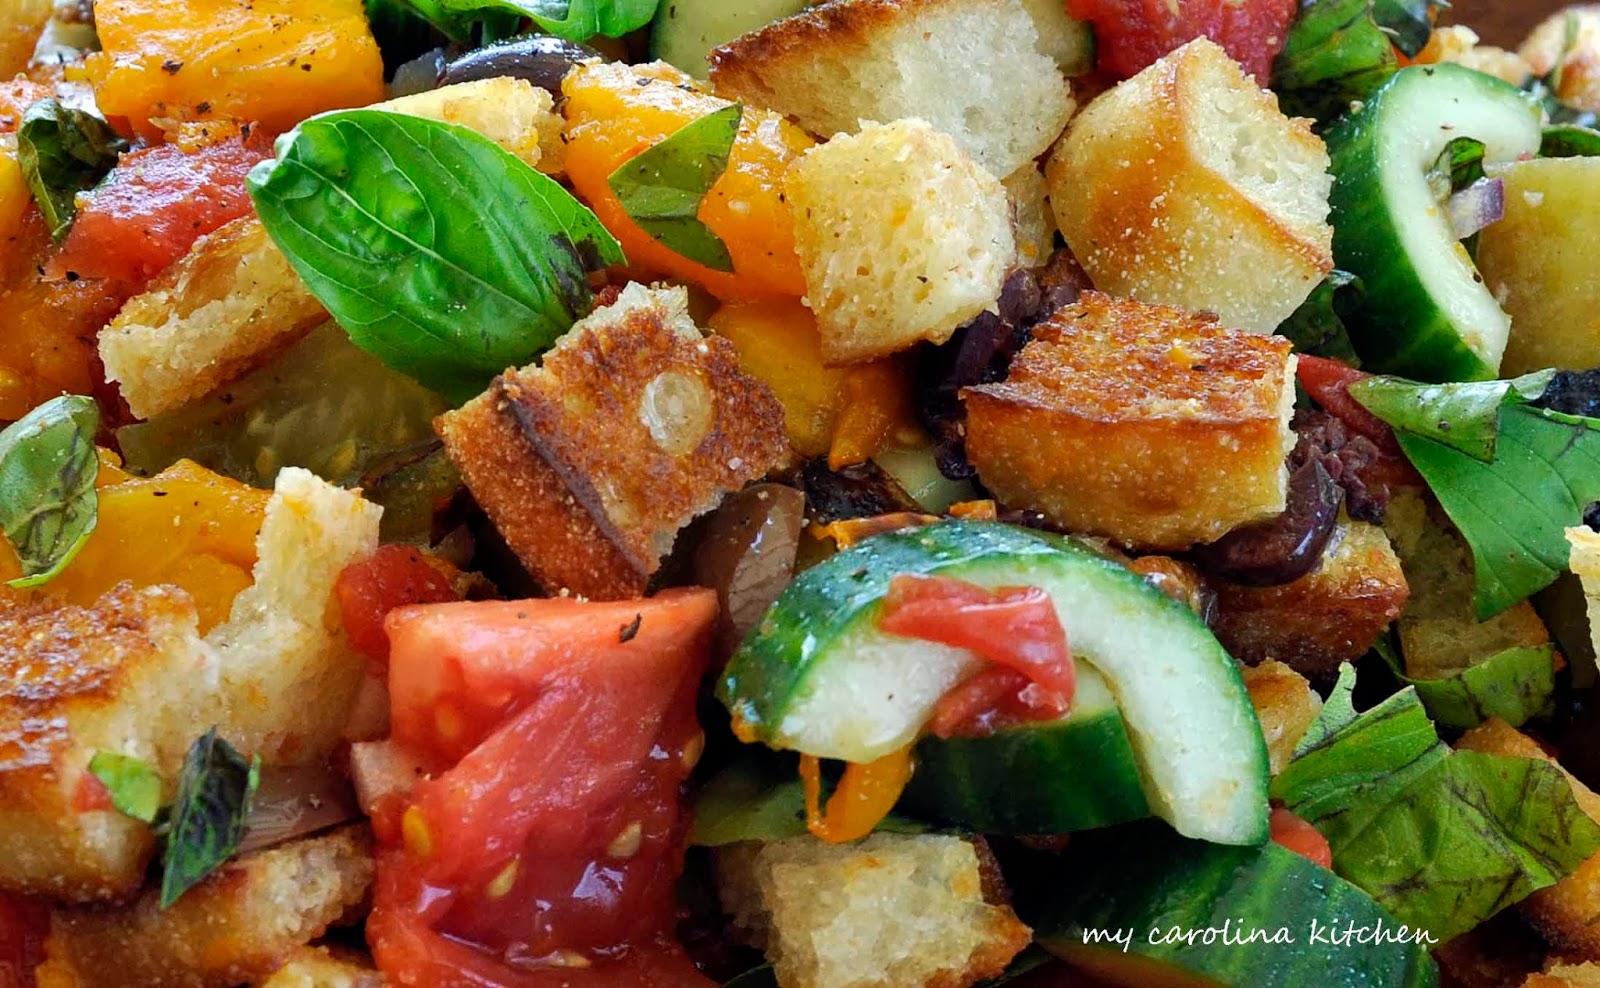 My Carolina Kitchen: Bread Salad with Charred Tomatoes, Cucumbers ...